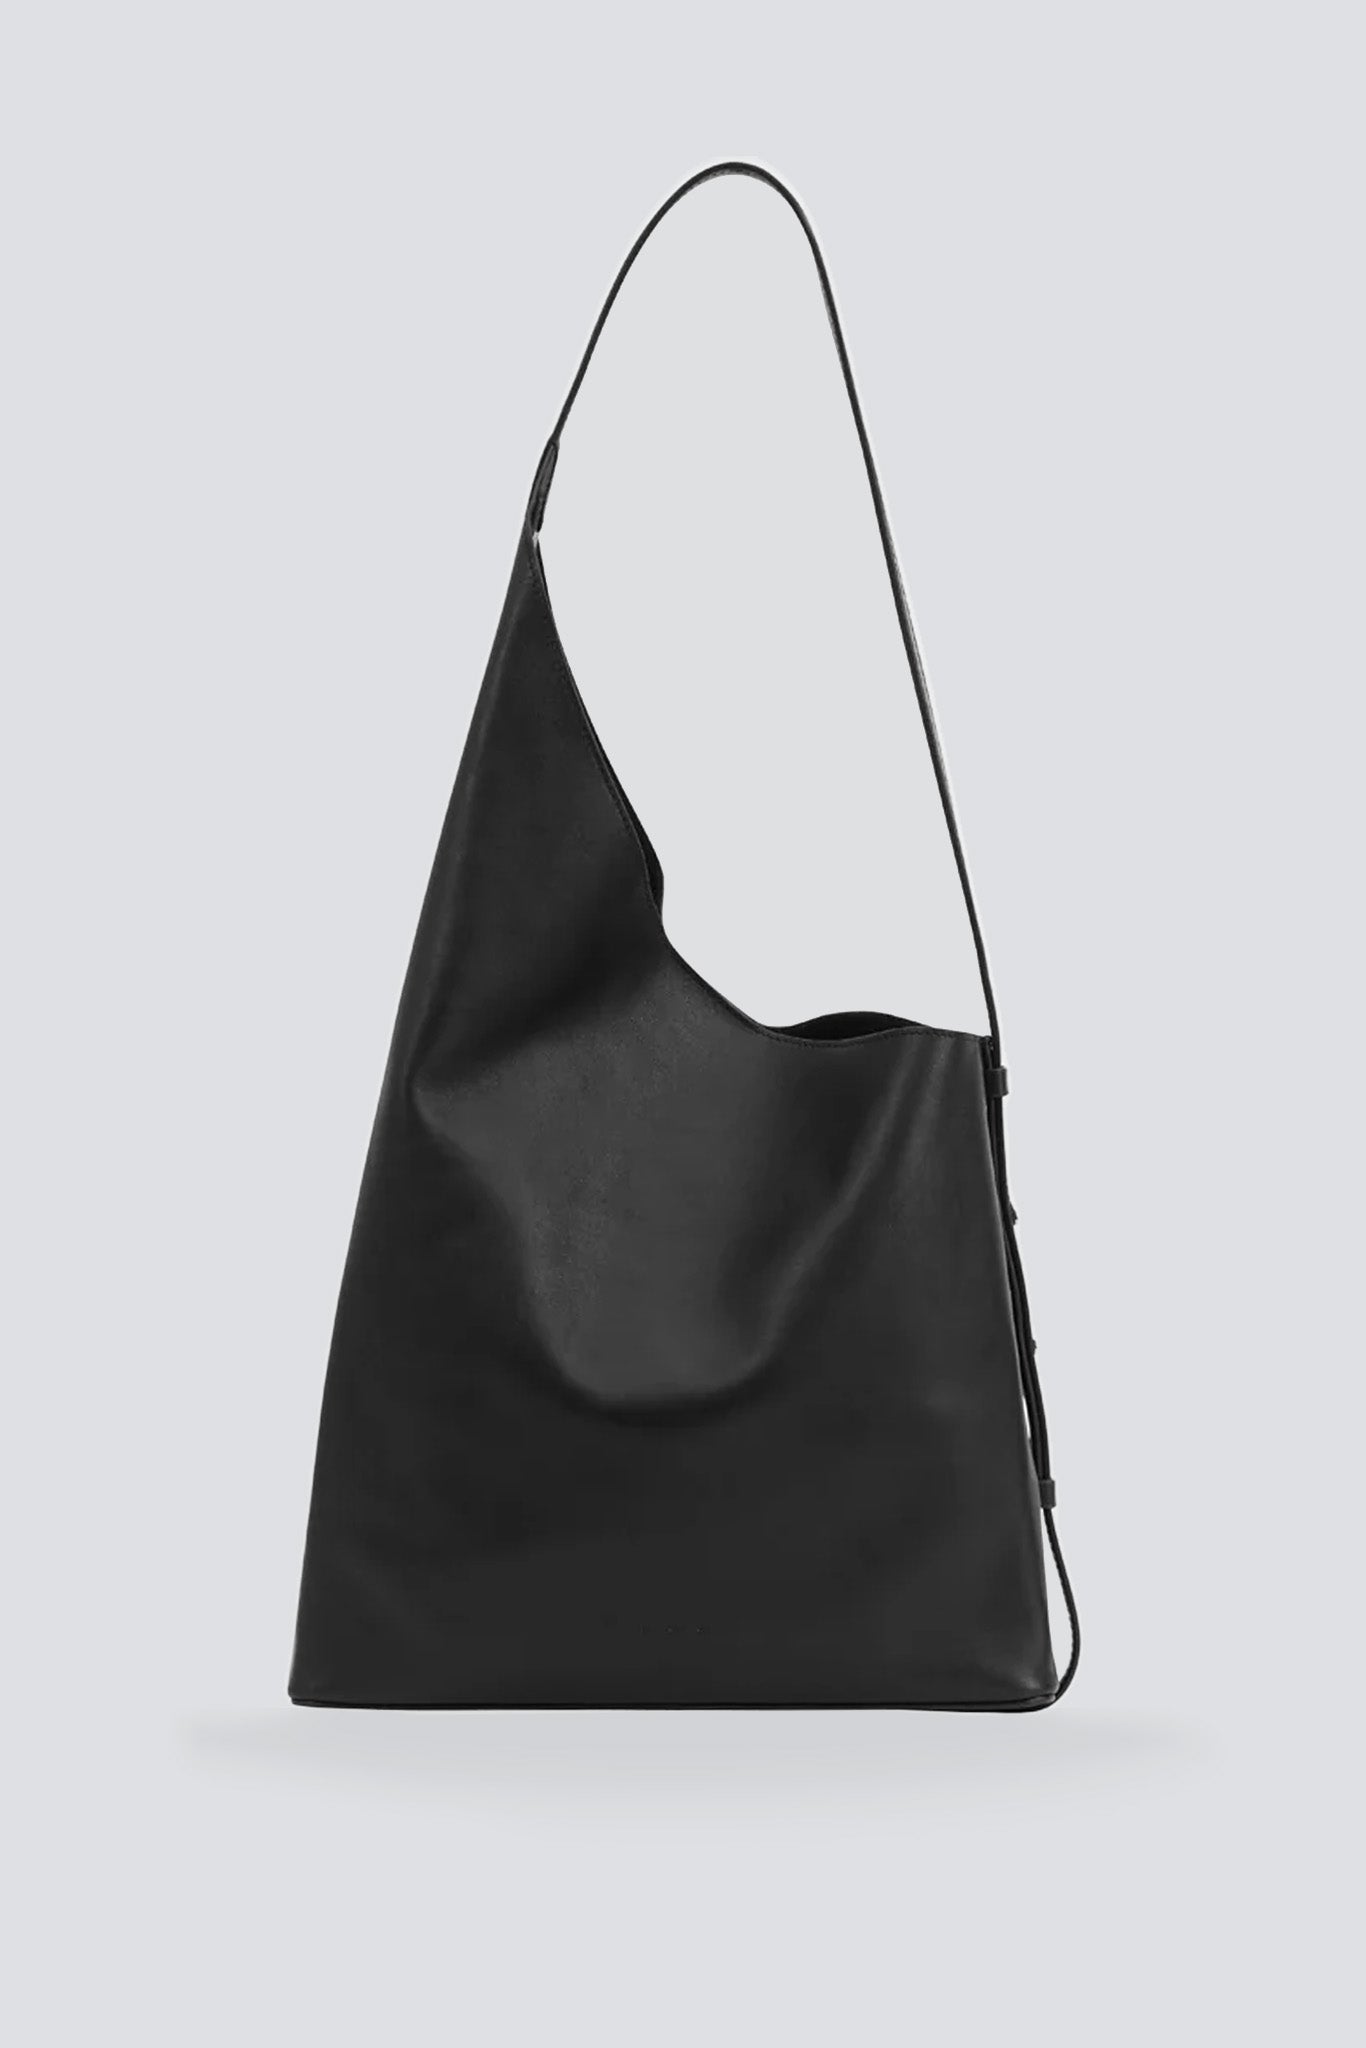 Aesther Ekme Black Sway Baguette Bag